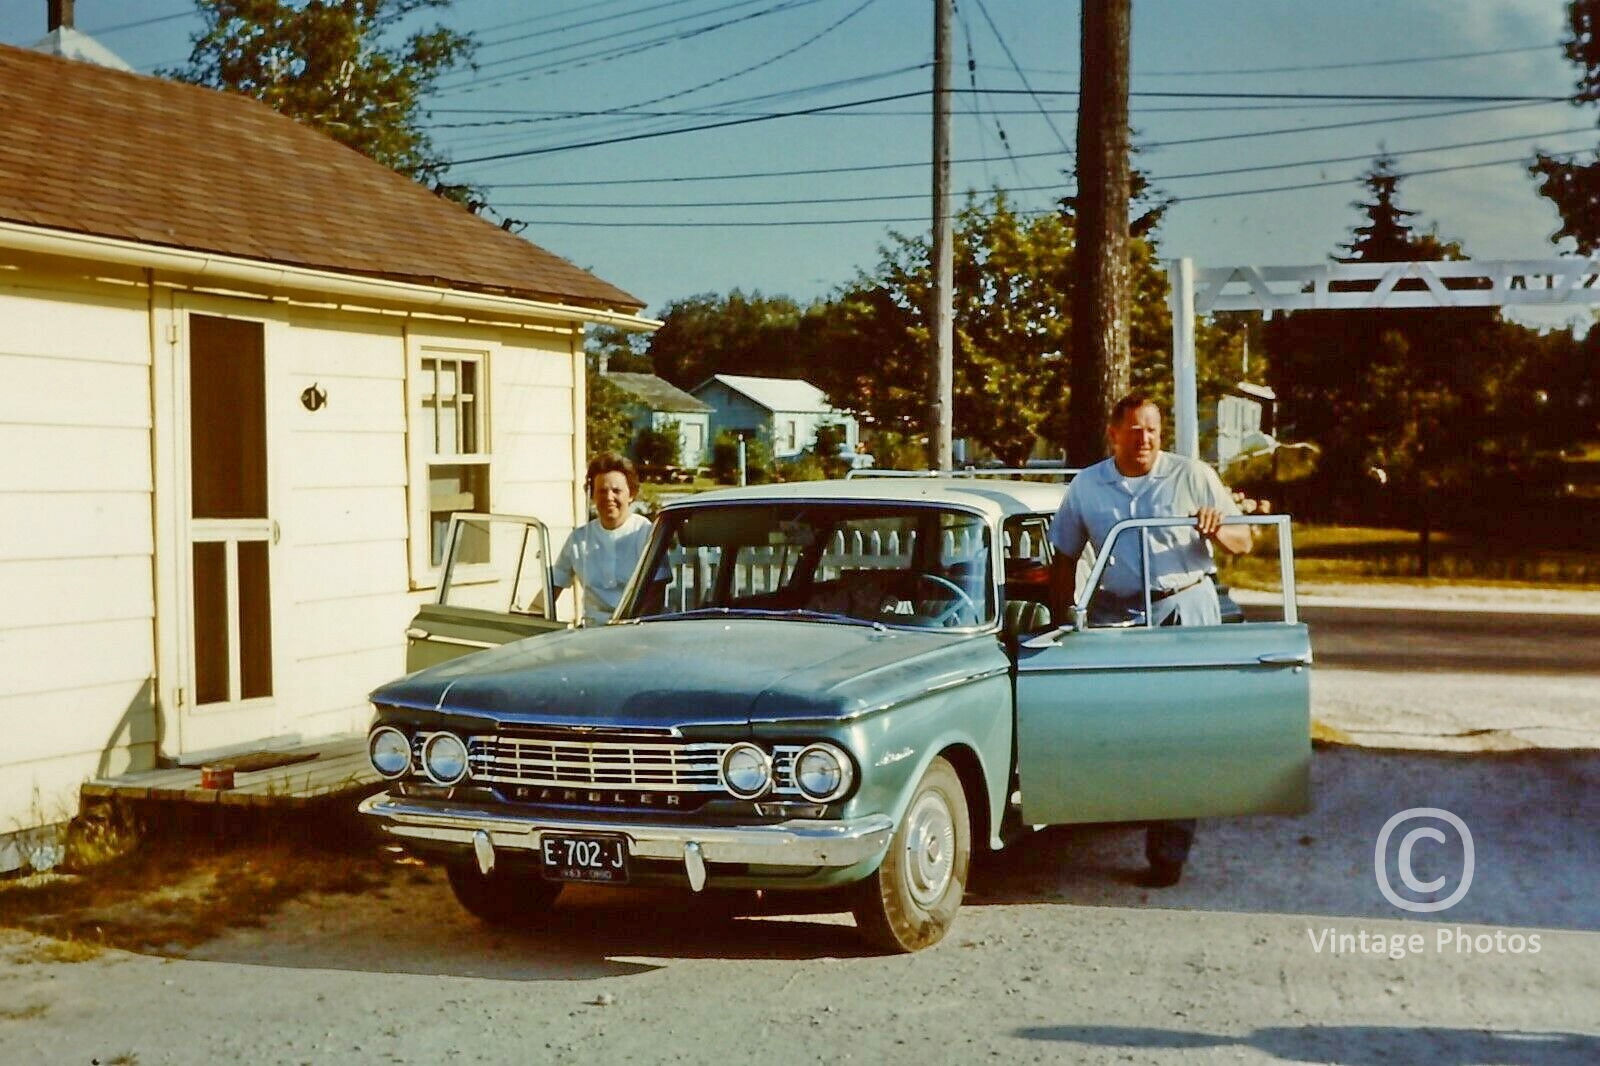 1963 Rambler Classic Car, Man & Woman, Ohio USA